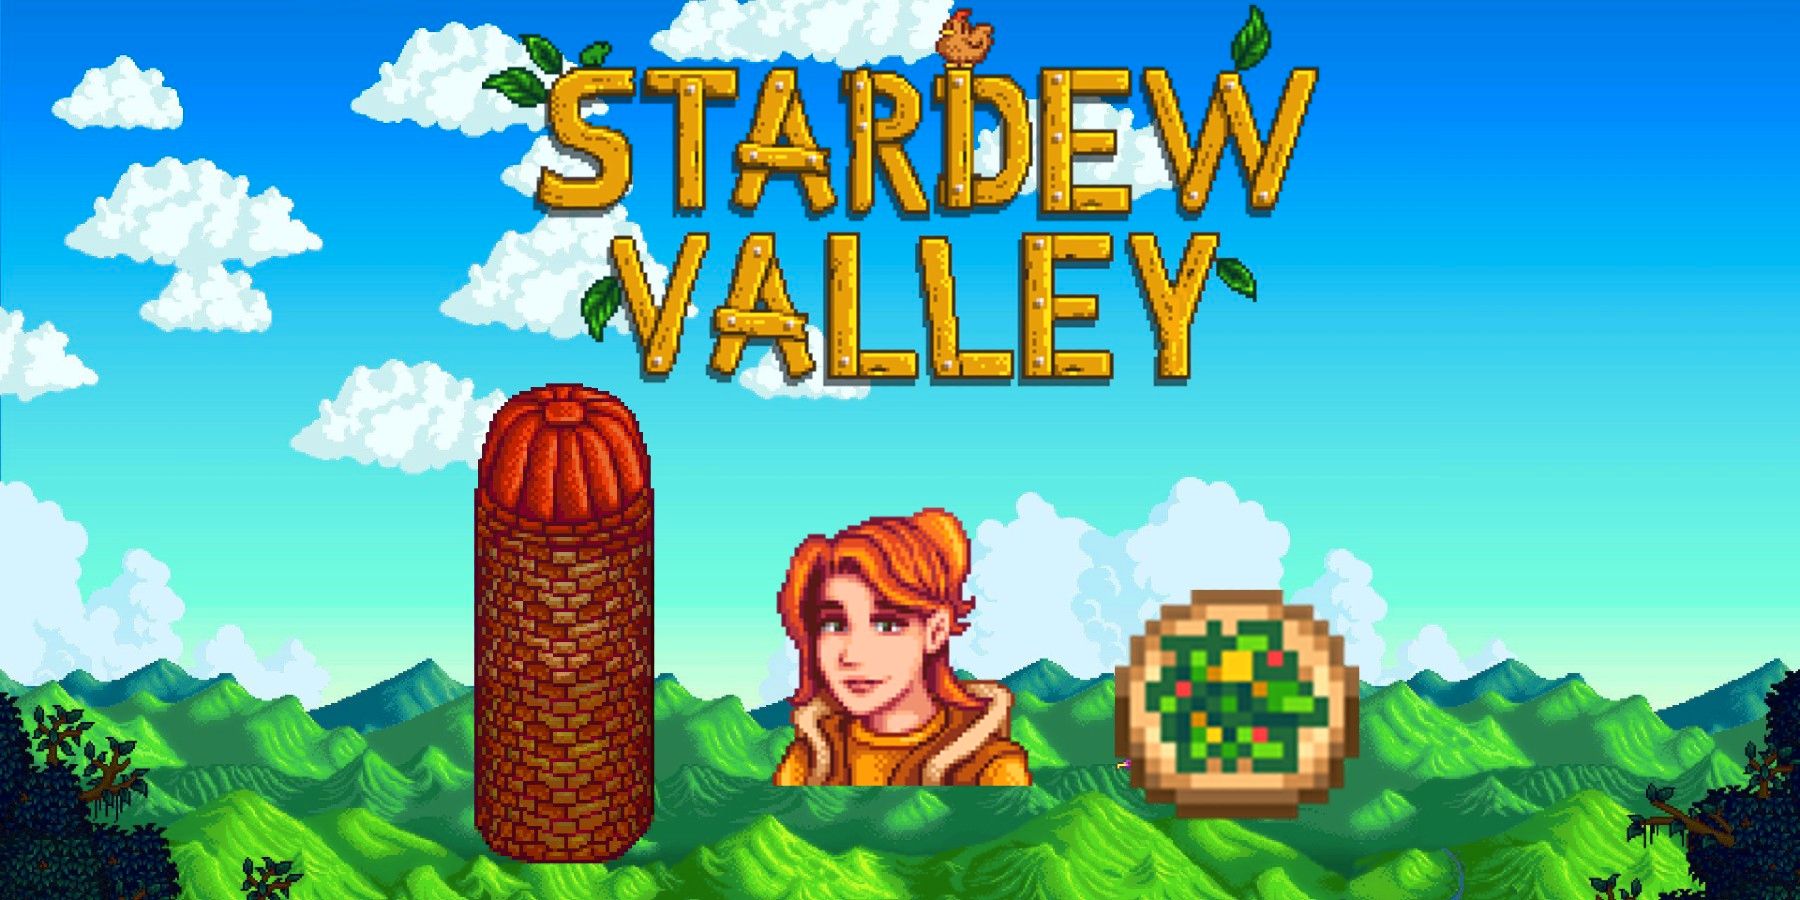 Stardew Valley 비디오는 게임 경제의 주요 결함을 지적합니다.